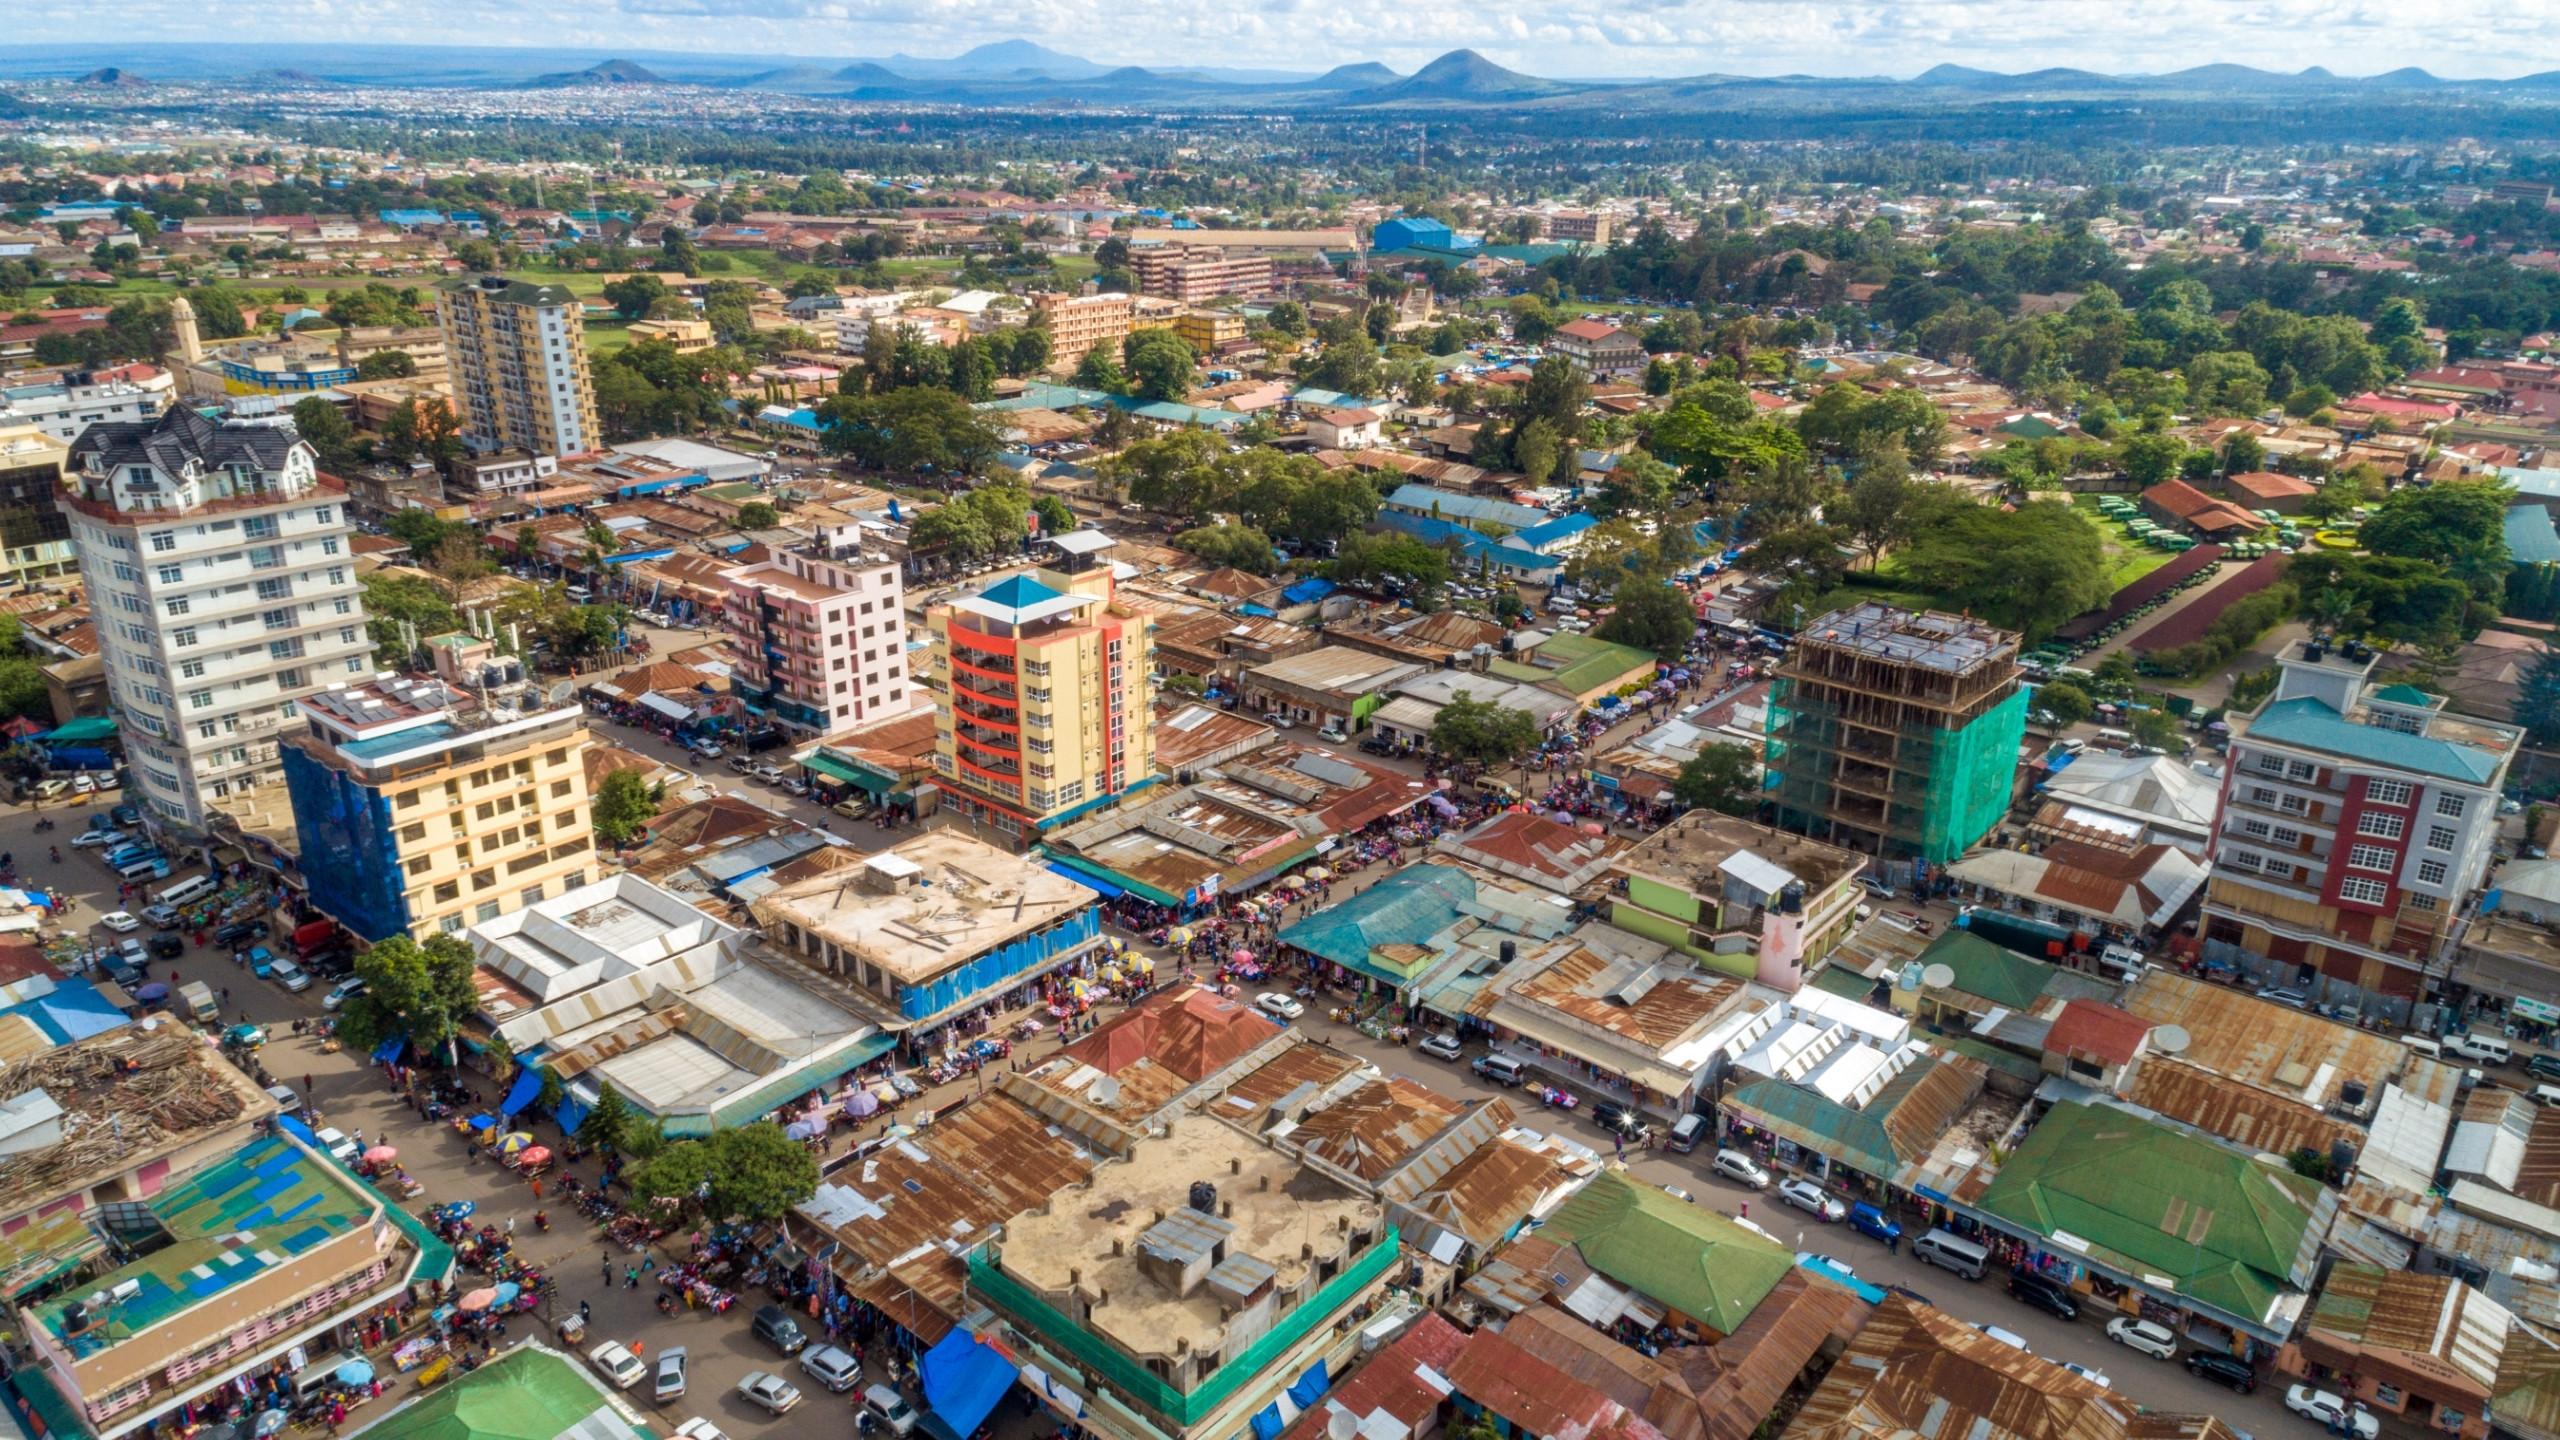 Urban Area of the City of Arusha, Tanzania